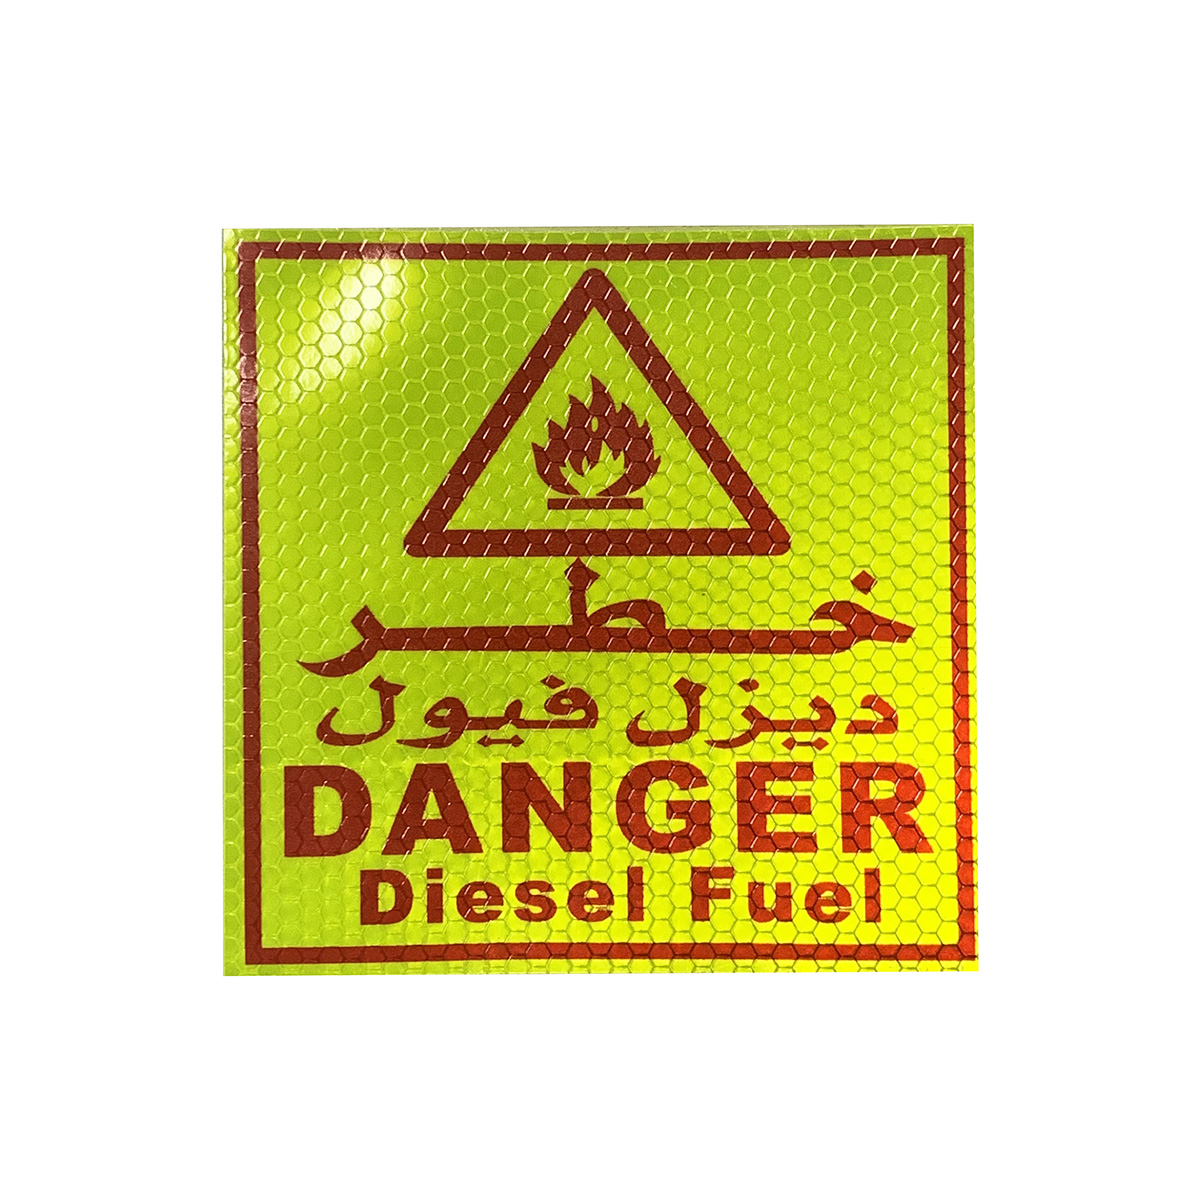 "DANGER" Public Caution Safety Warning PVC Reflective Sticker 13*13cm